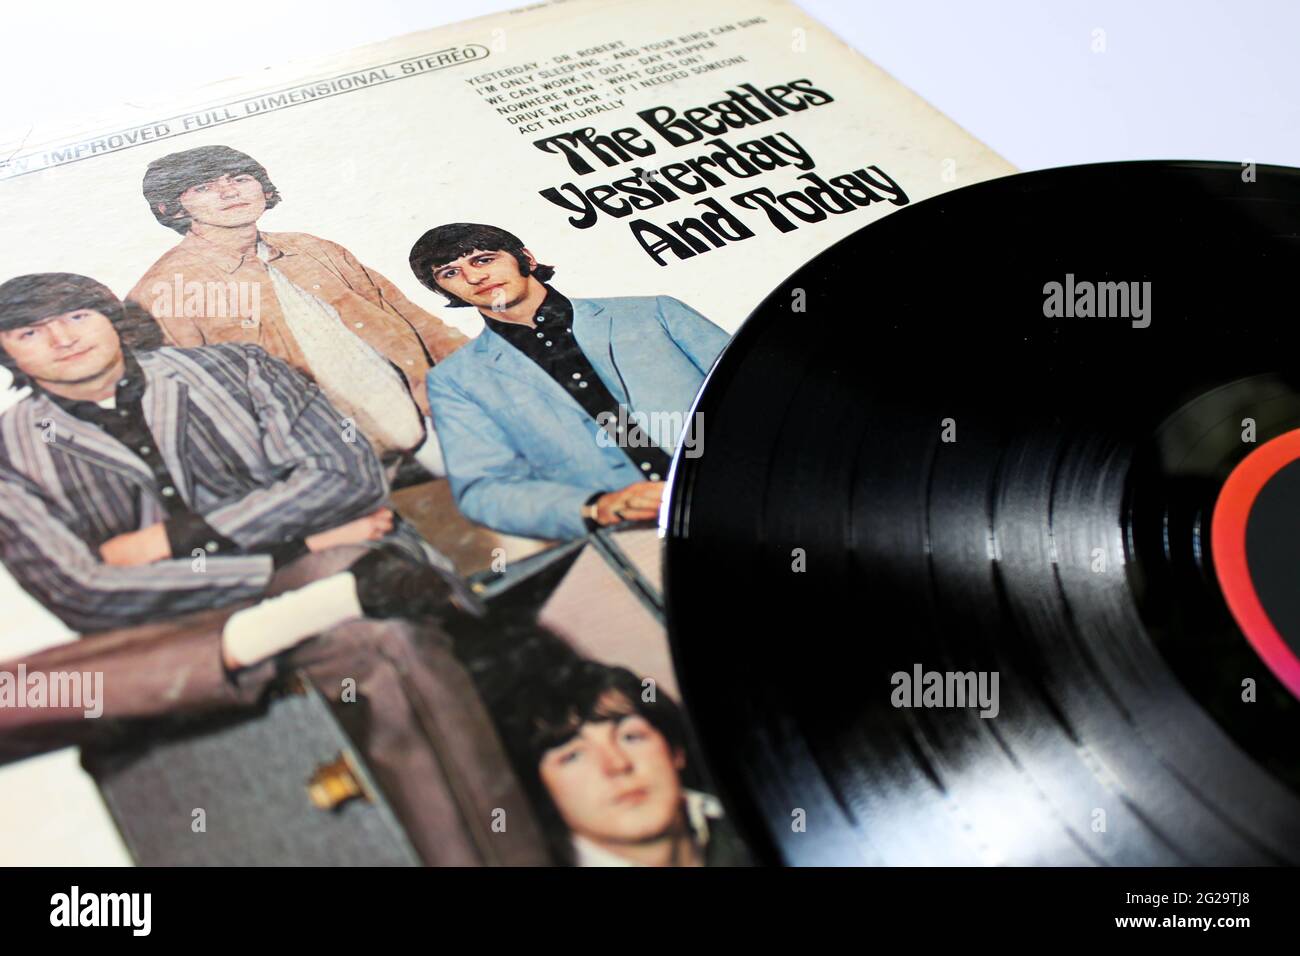 English rock band The Beatles music album on vinyl record LP disc ...